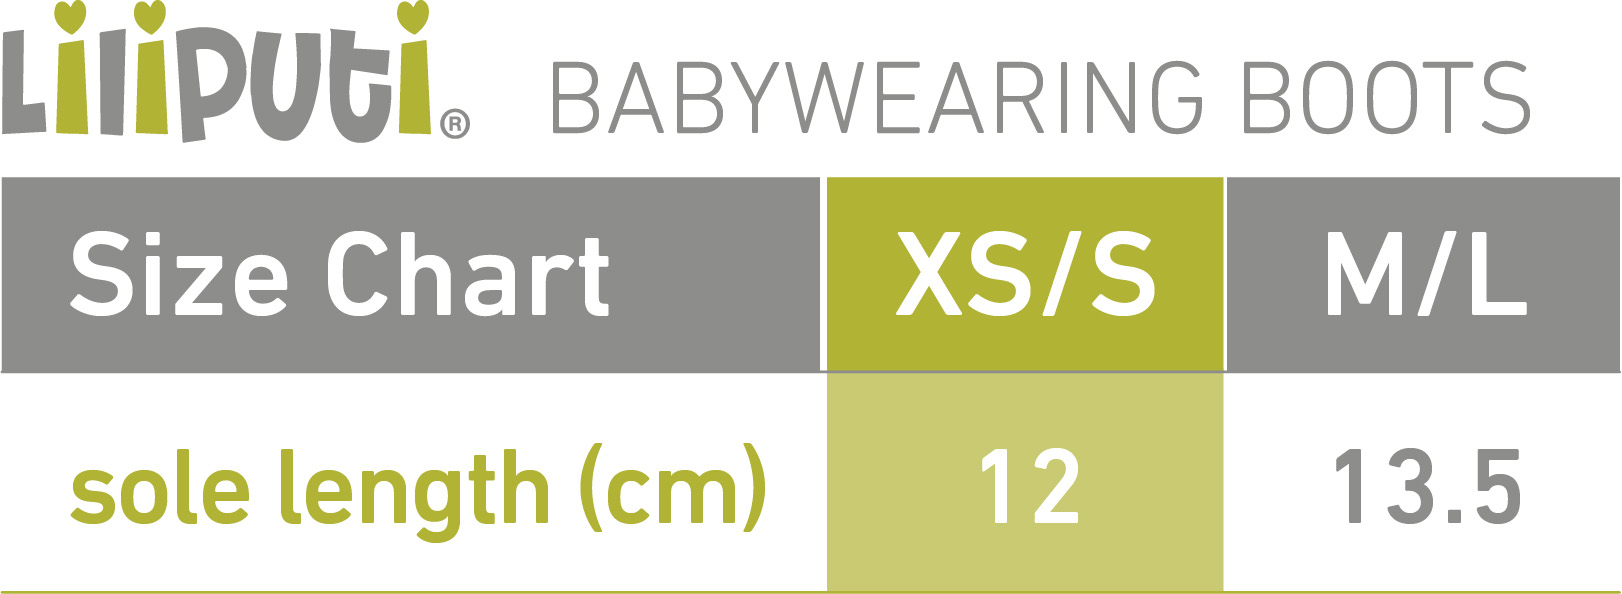 babywearing booties size chart